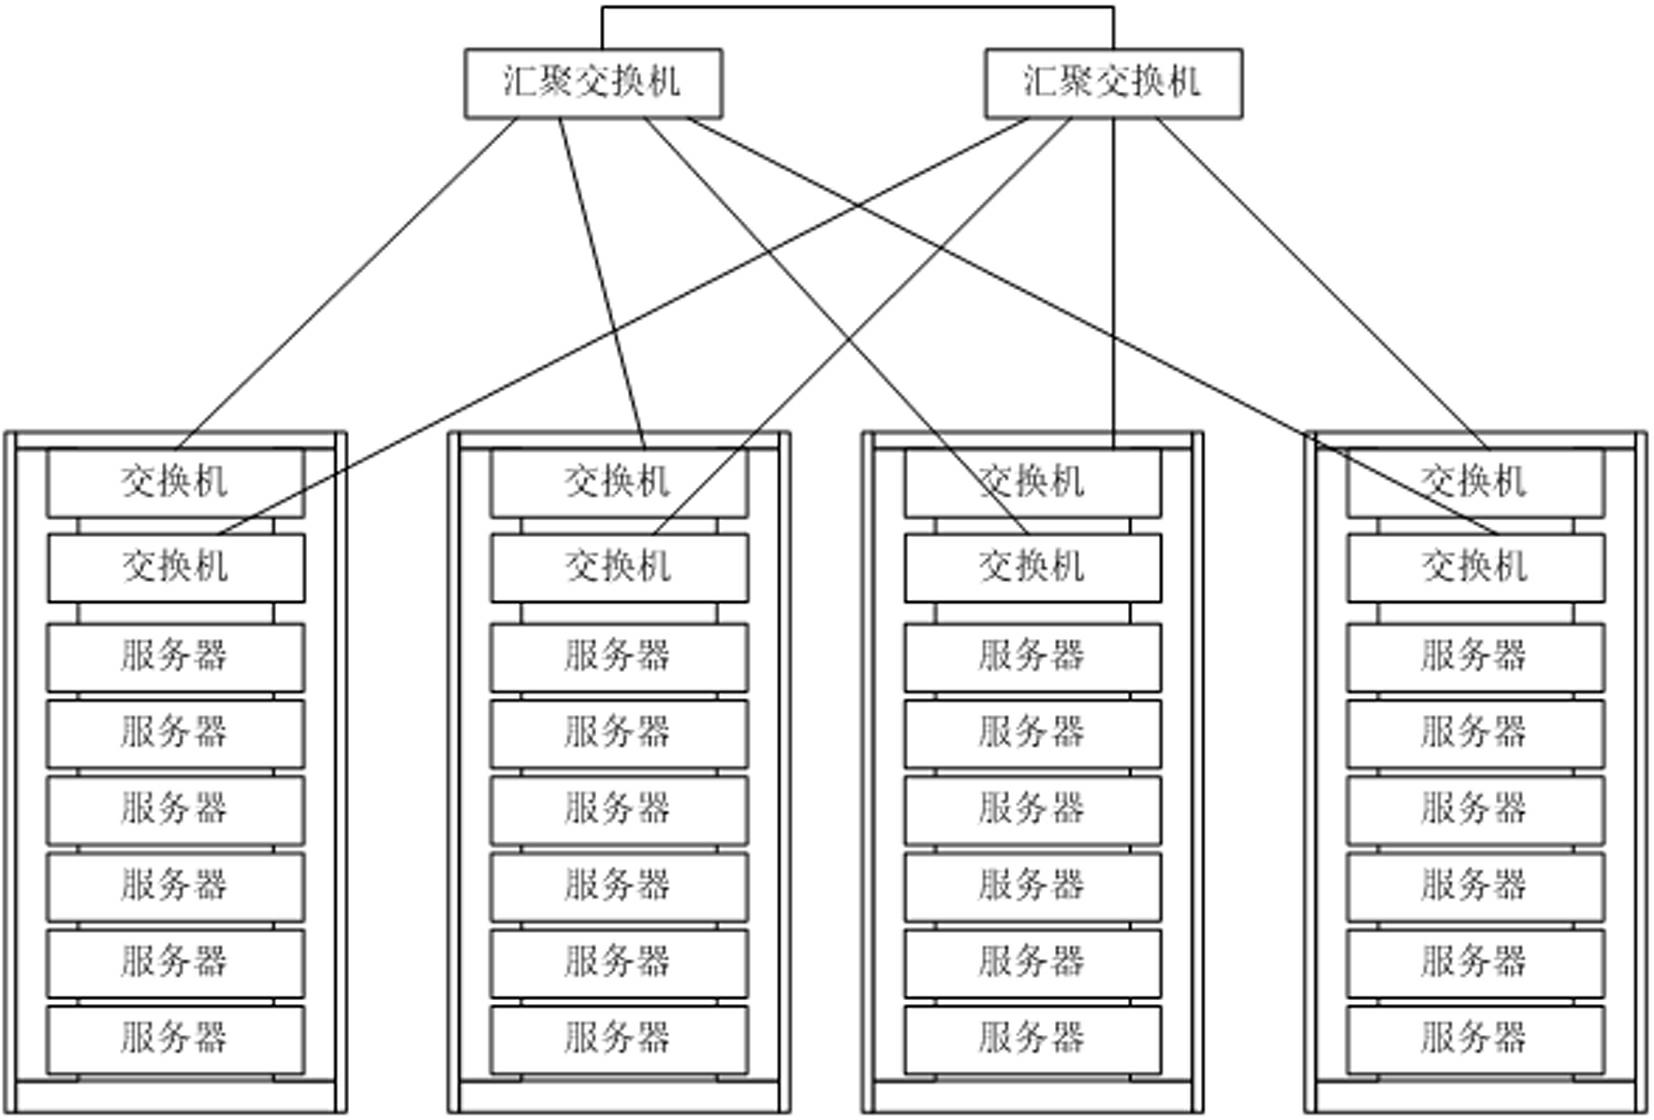 High-performance cluster computing system based on x86PC framework